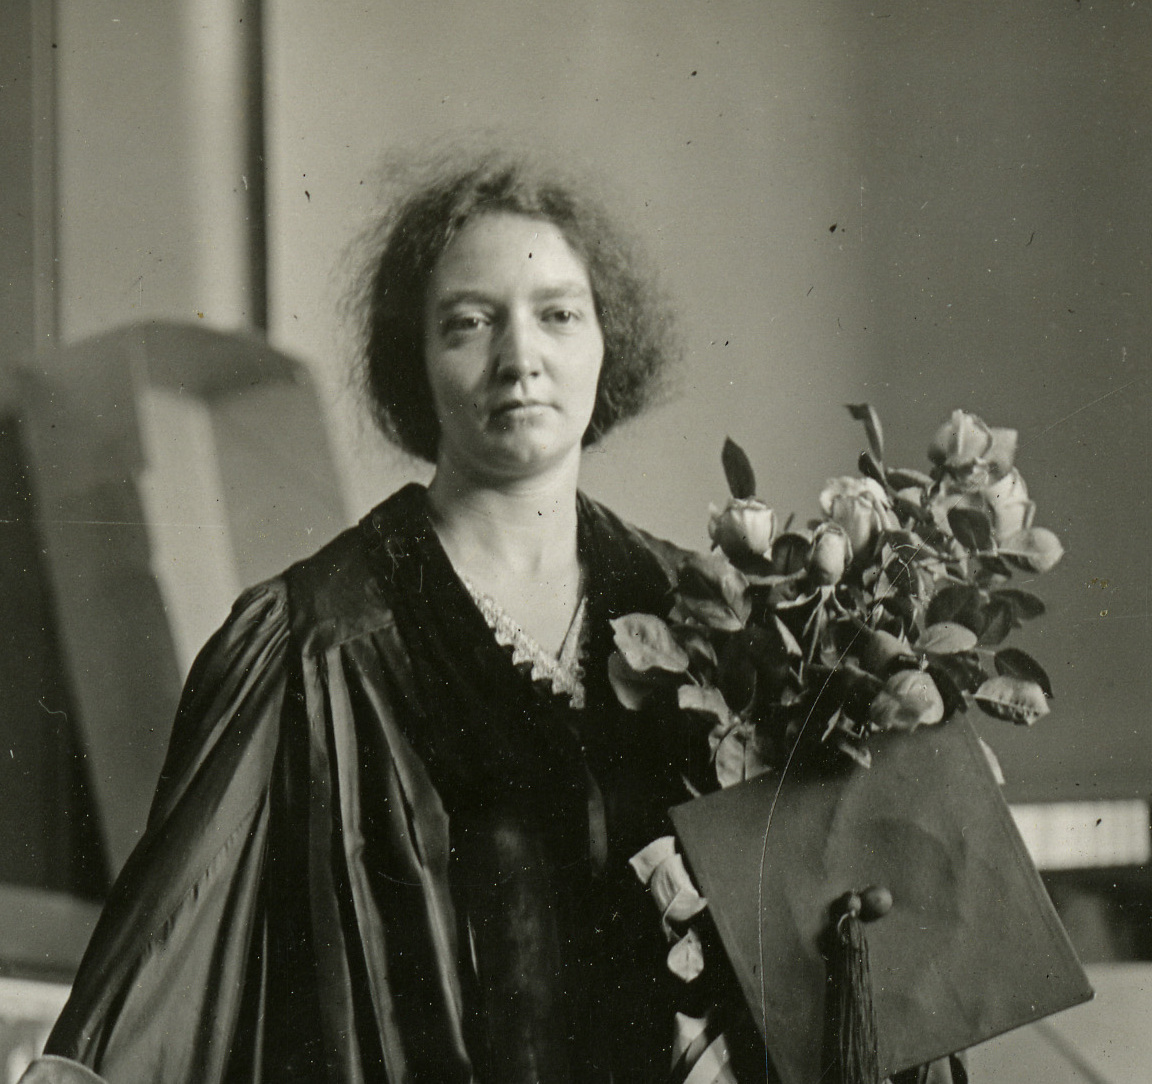 Curie in 1921